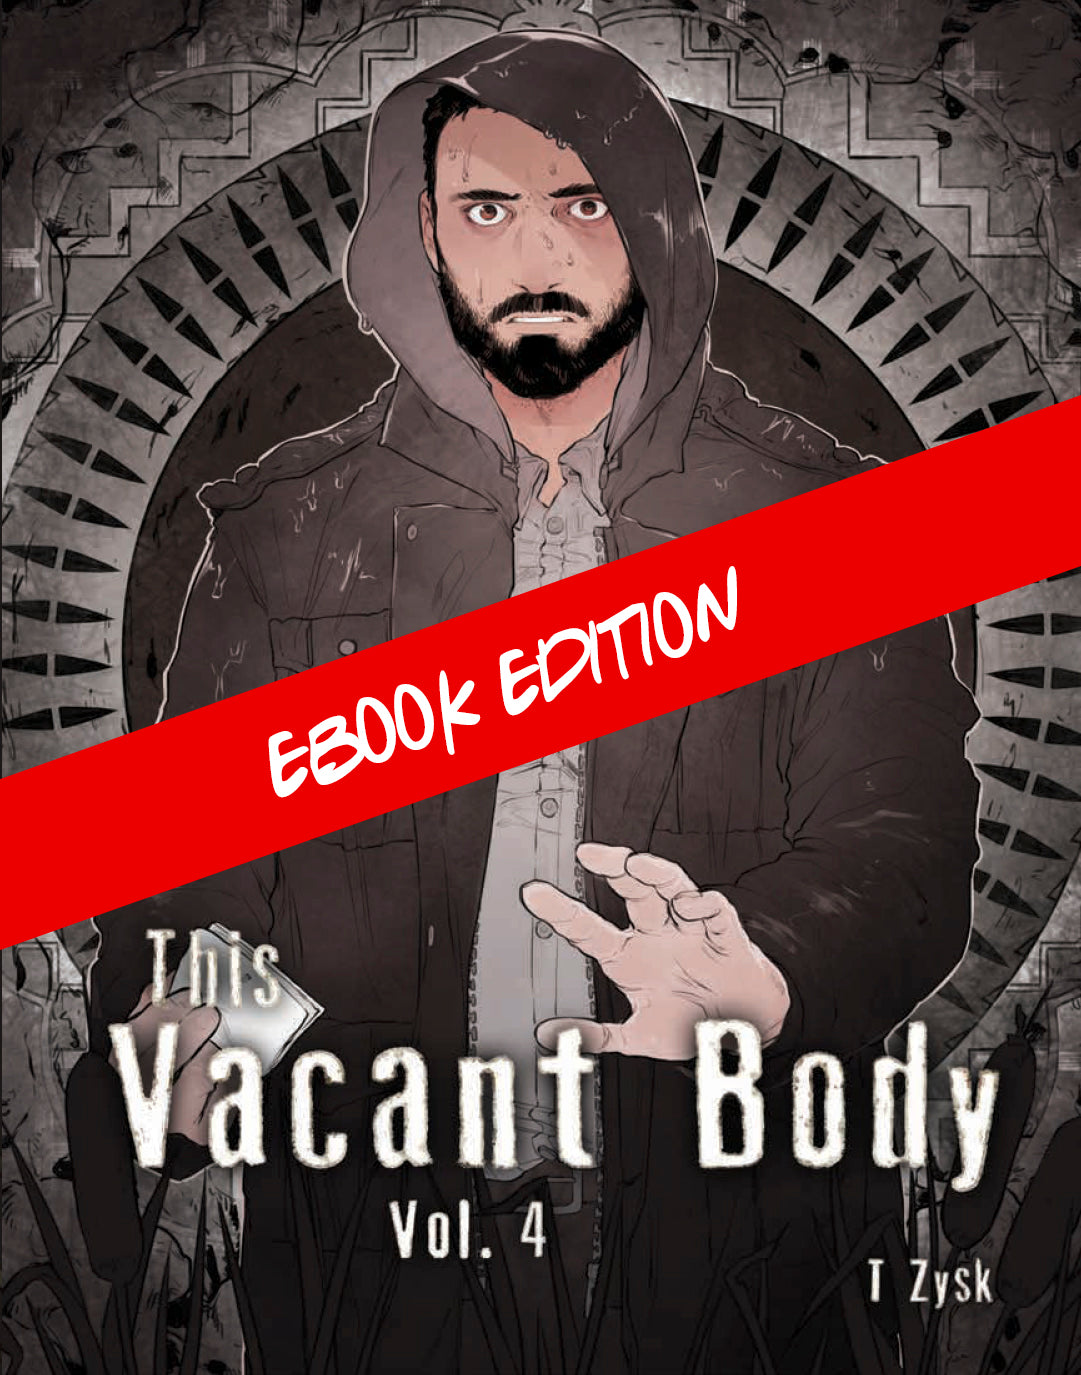 eVacant Body Vol.4 by T Zysk